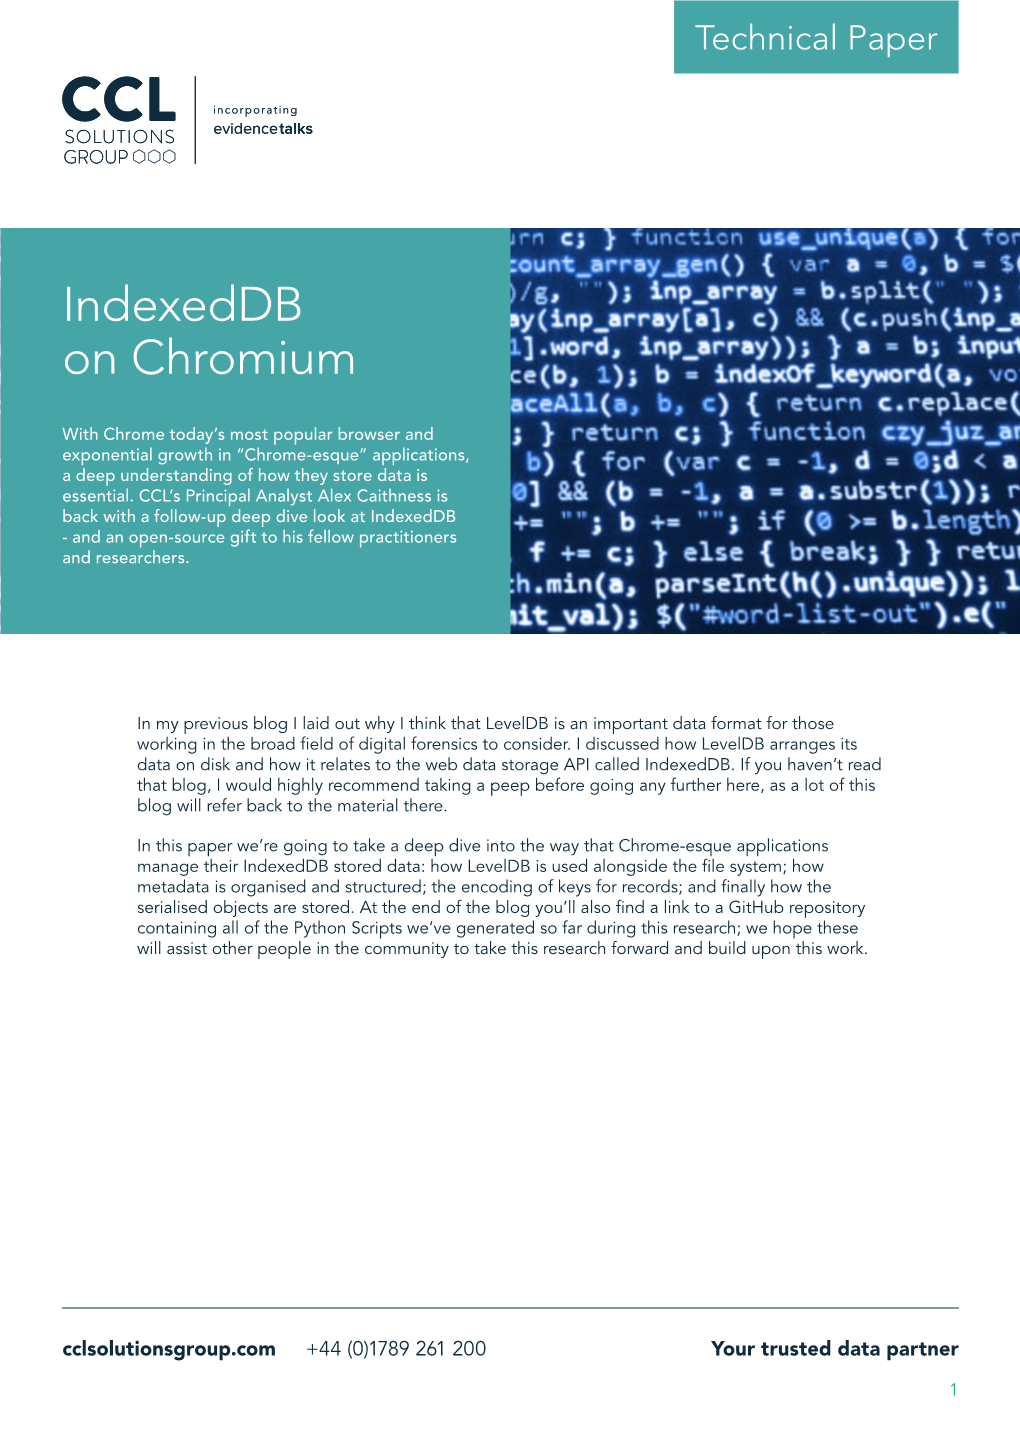 Indexeddb on Chromium